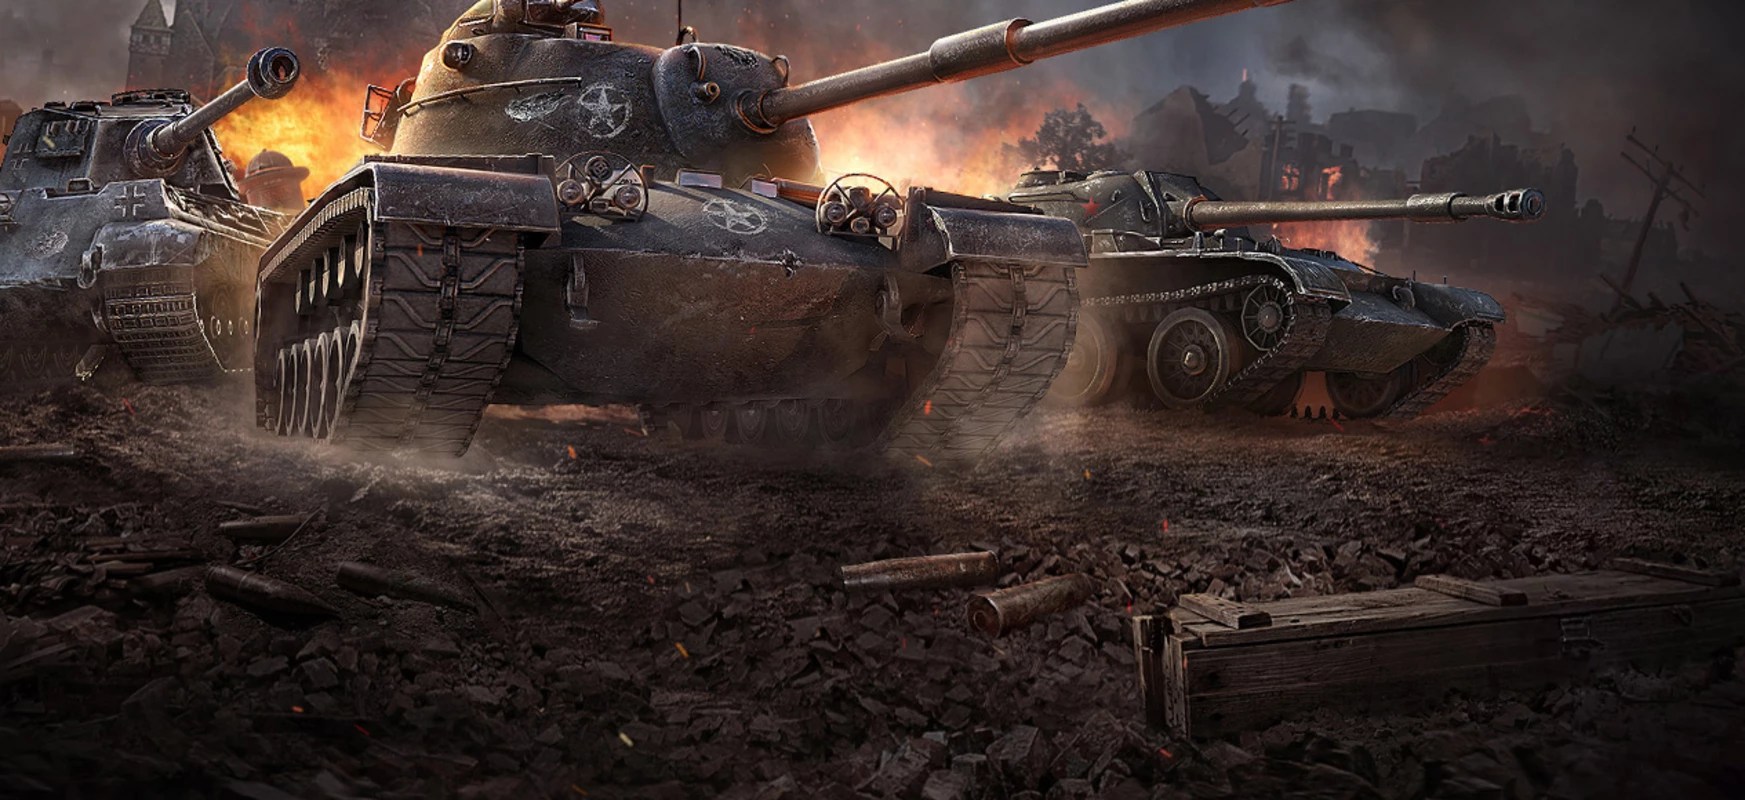 World of Tanks Blitz 3D online 10.7.0.365 APK feature